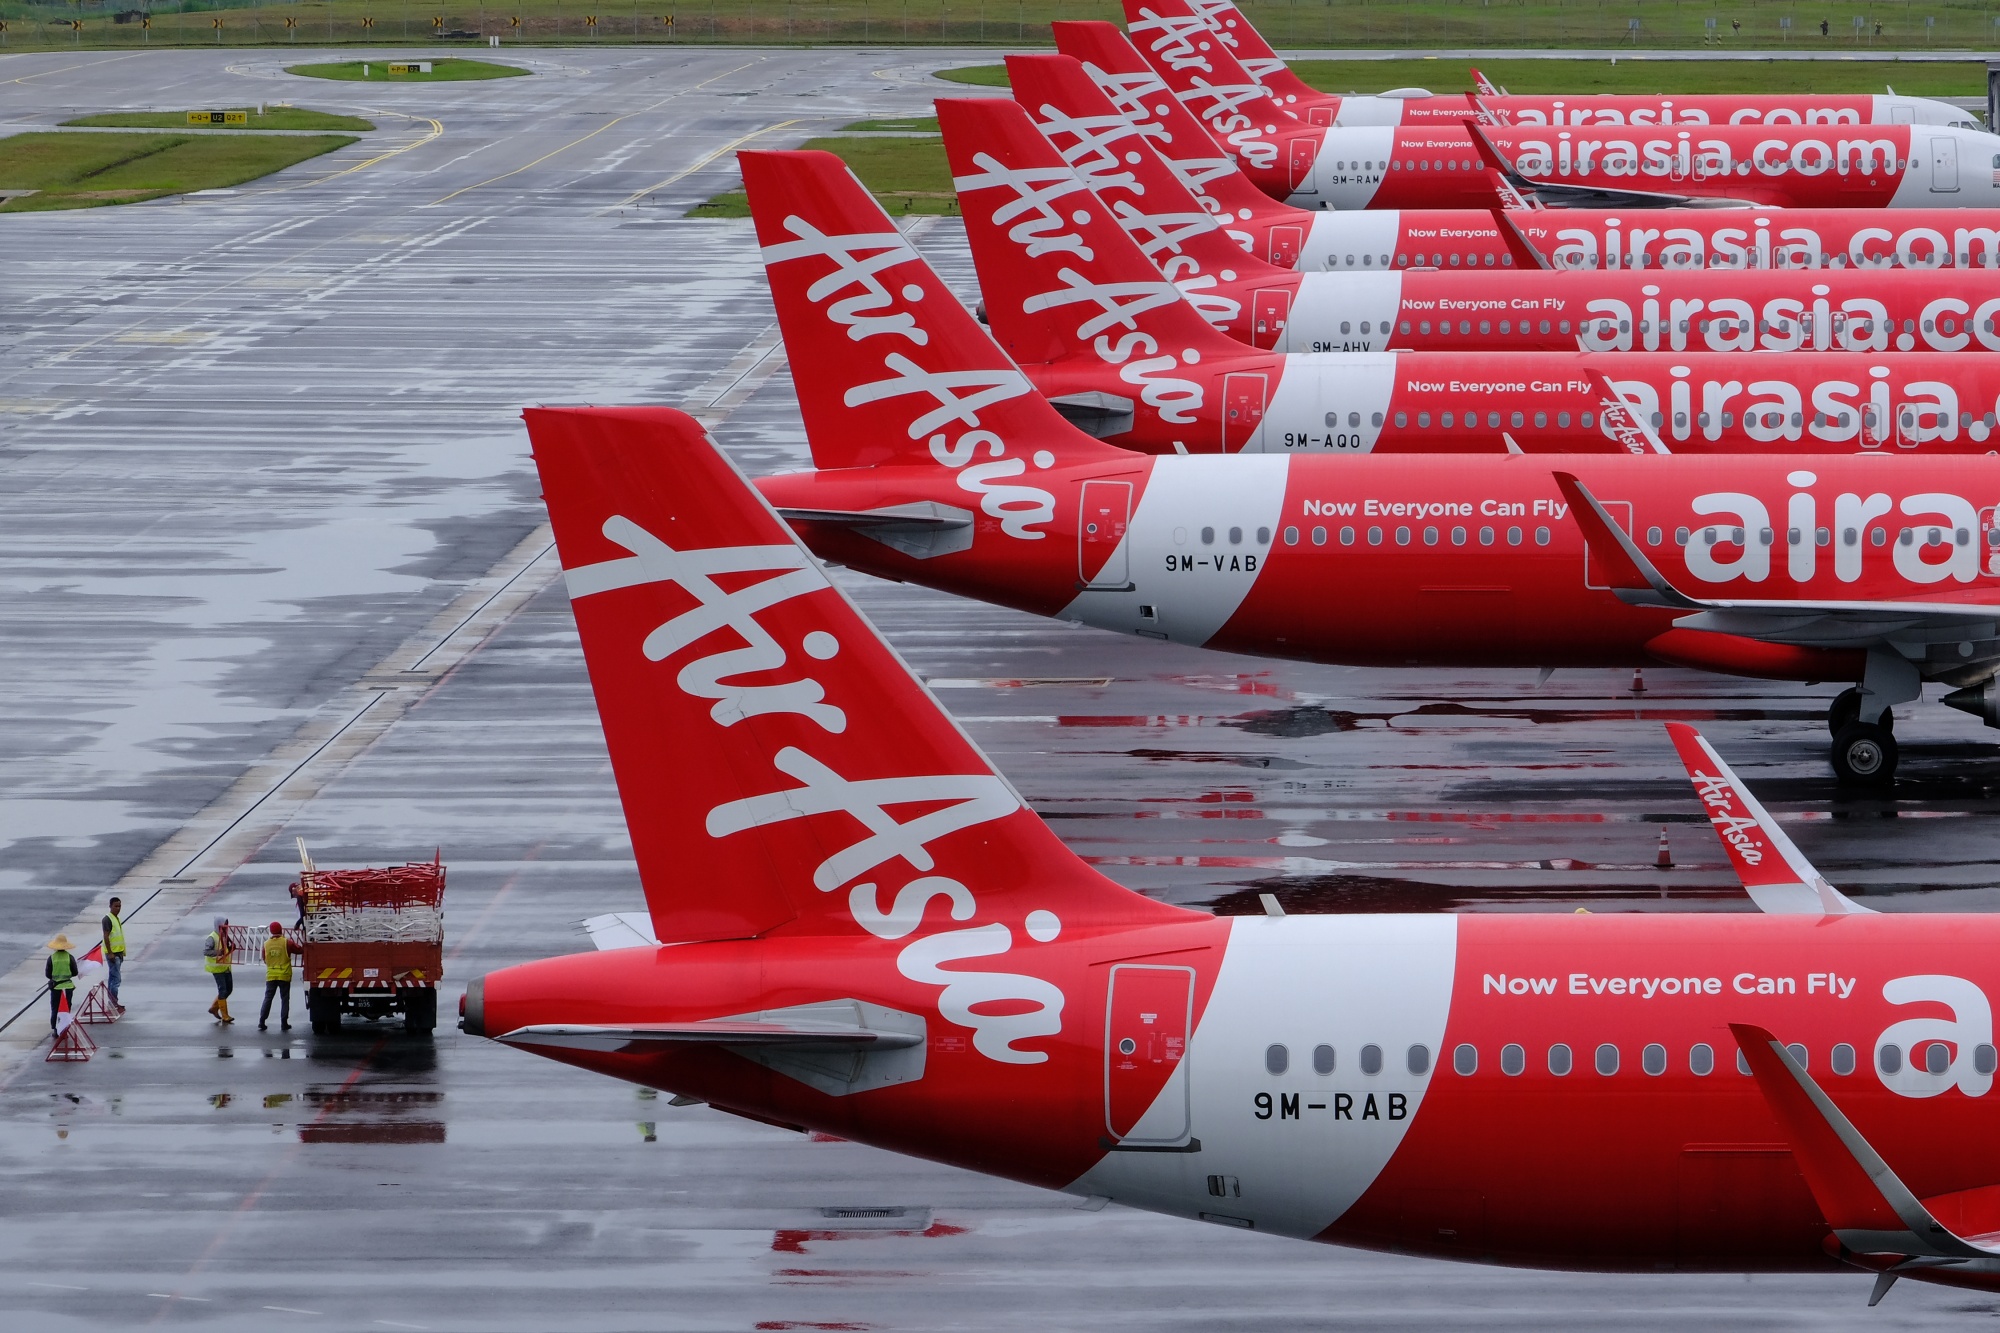 AirAsia aircraft stand on the tarmac at Kuala Lumpur International Airport 2 (KLIA2) in Malaysia on May 13.